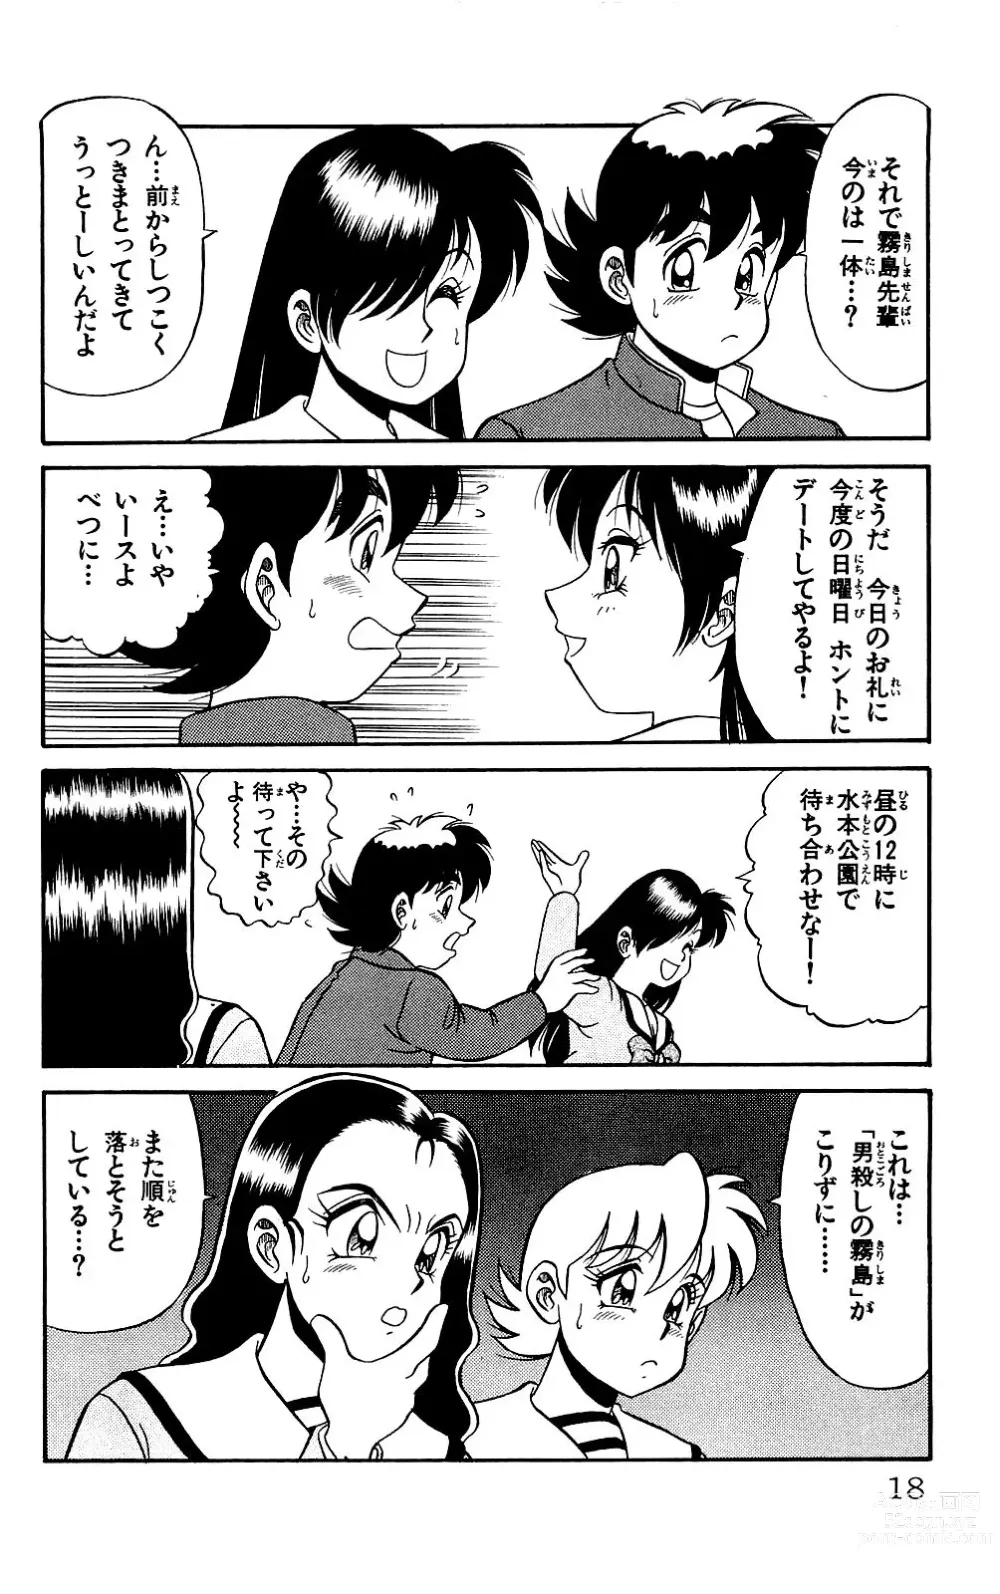 Page 16 of manga Orette Piyoritan Vol. 3